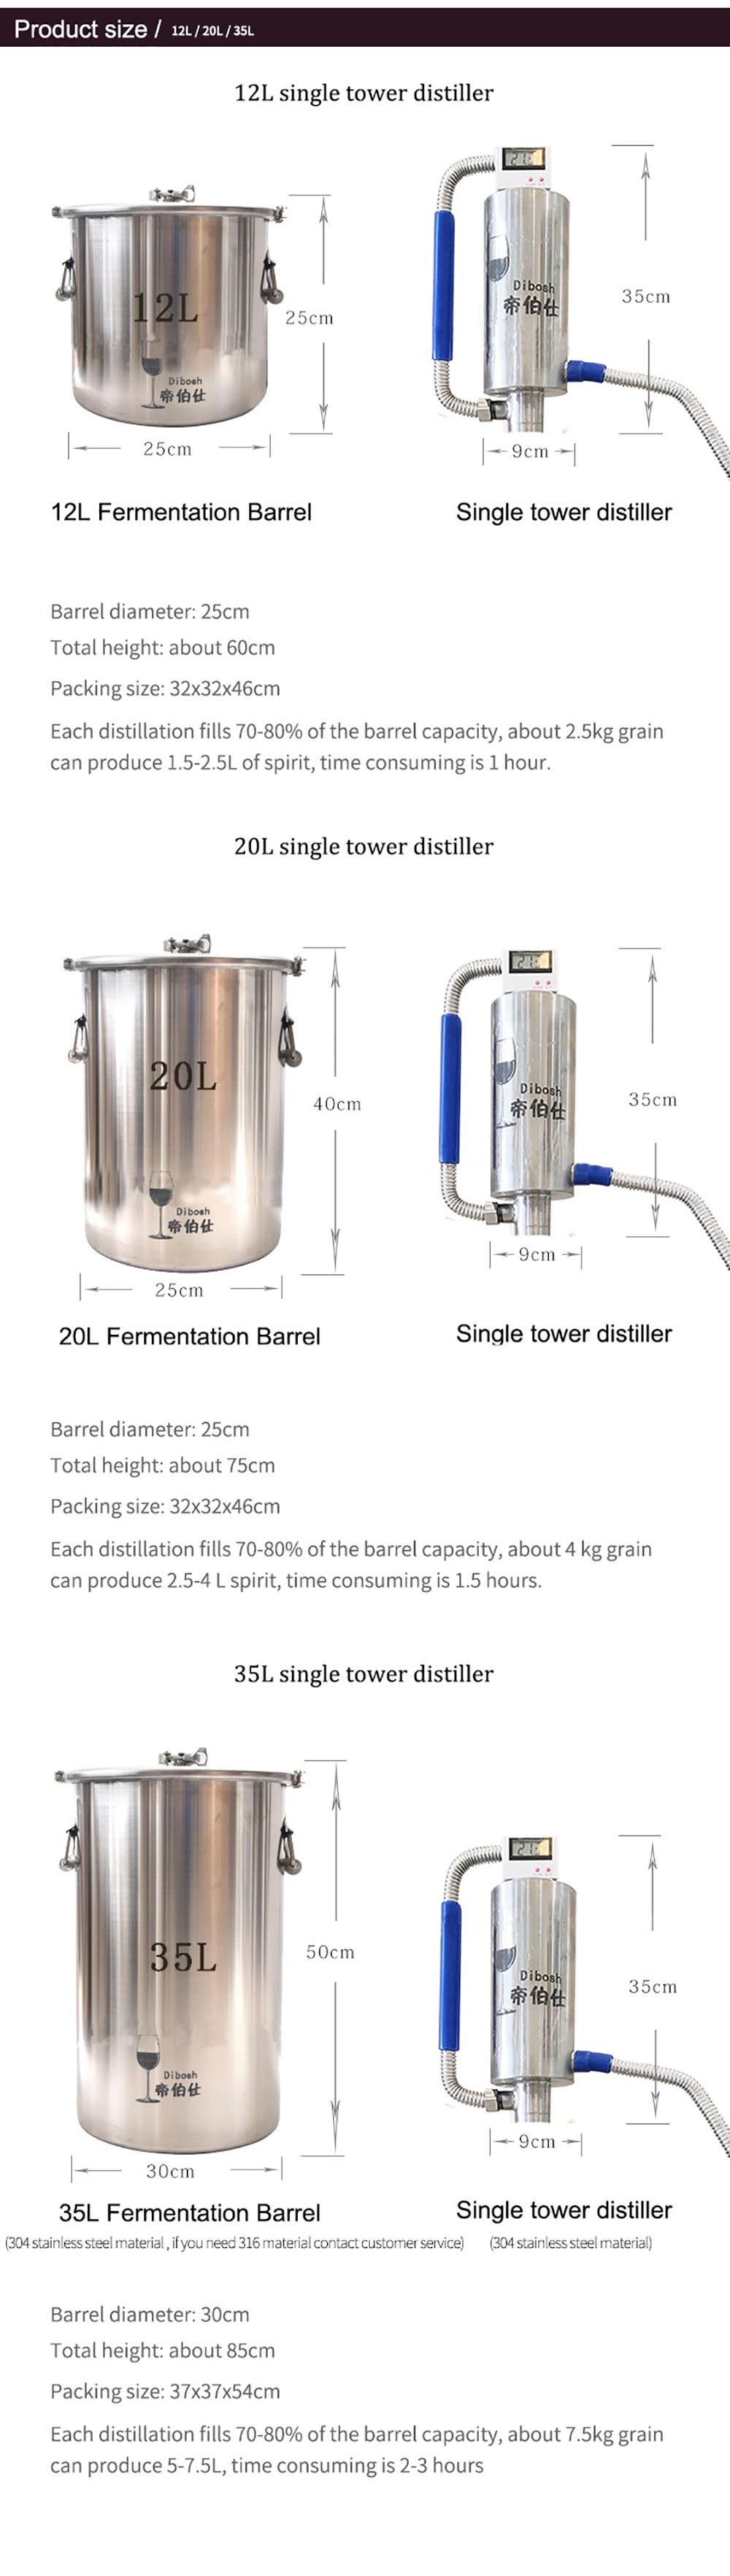 122035L-304-Food-Grade-Stainless-Steel-Distiller-for-Brewing-Liquor-Brandy-Alcohol-Moonshine-Making--1675106